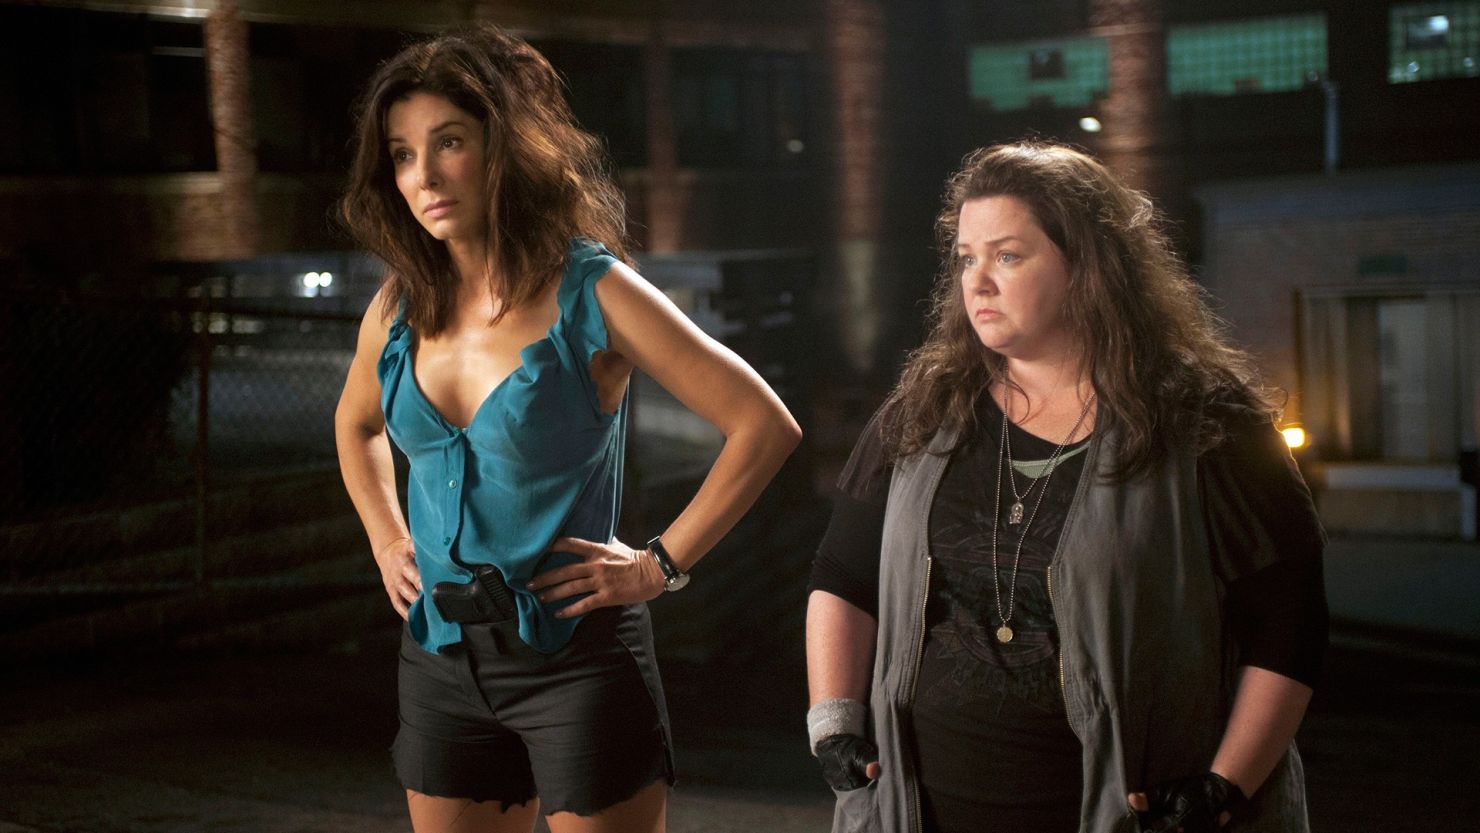 Sandra Bullock stars as Special Agent Sarah Ashburn and Melissa McCarthy stars as Det. Shannon Mullins in "The Heat."

